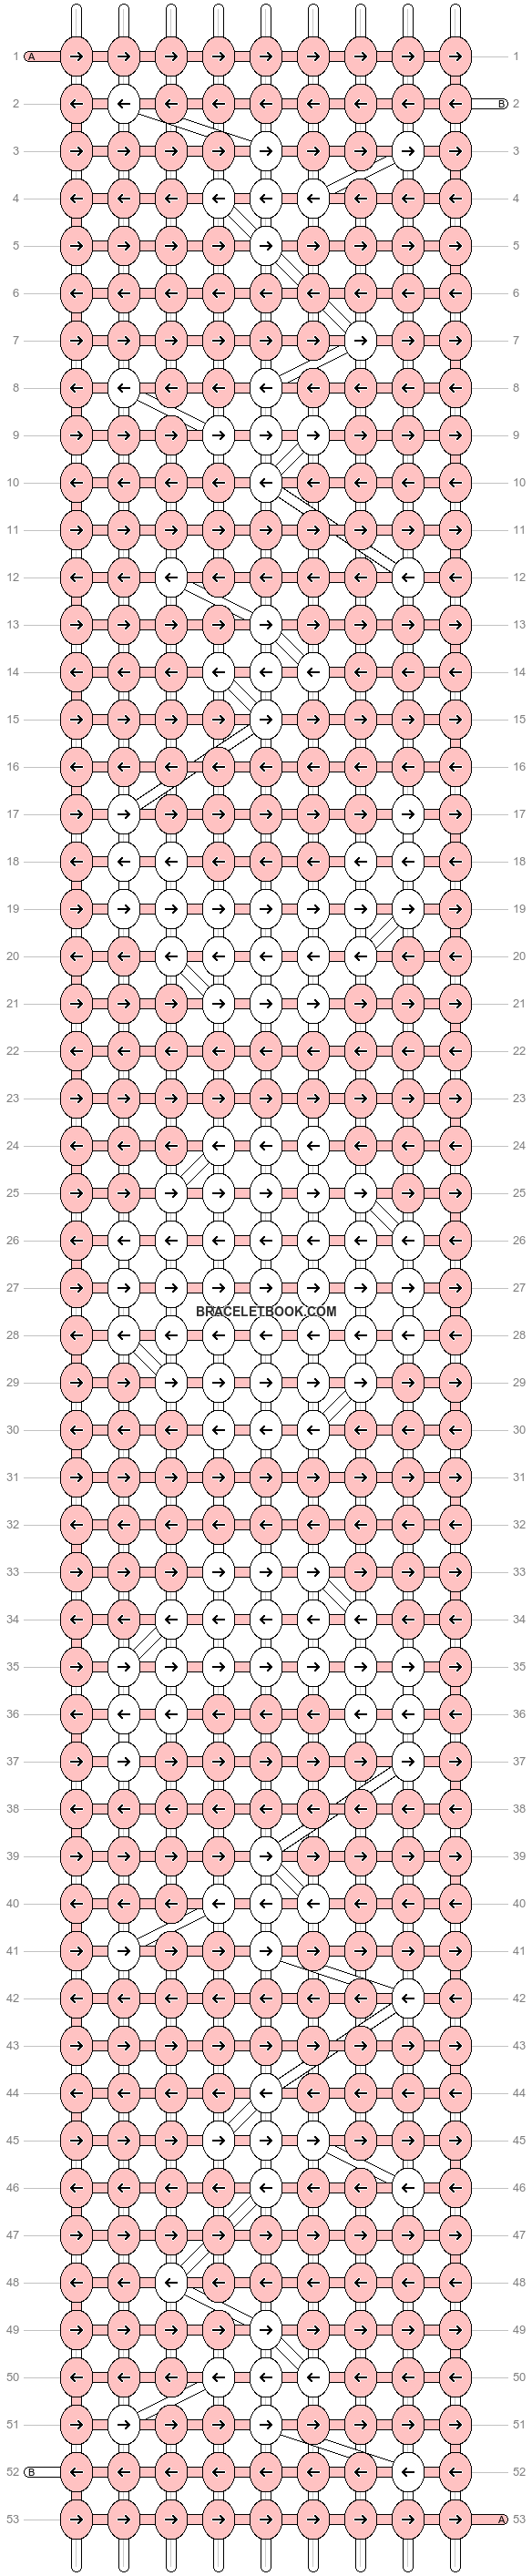 Alpha pattern #40067 variation #99721 pattern